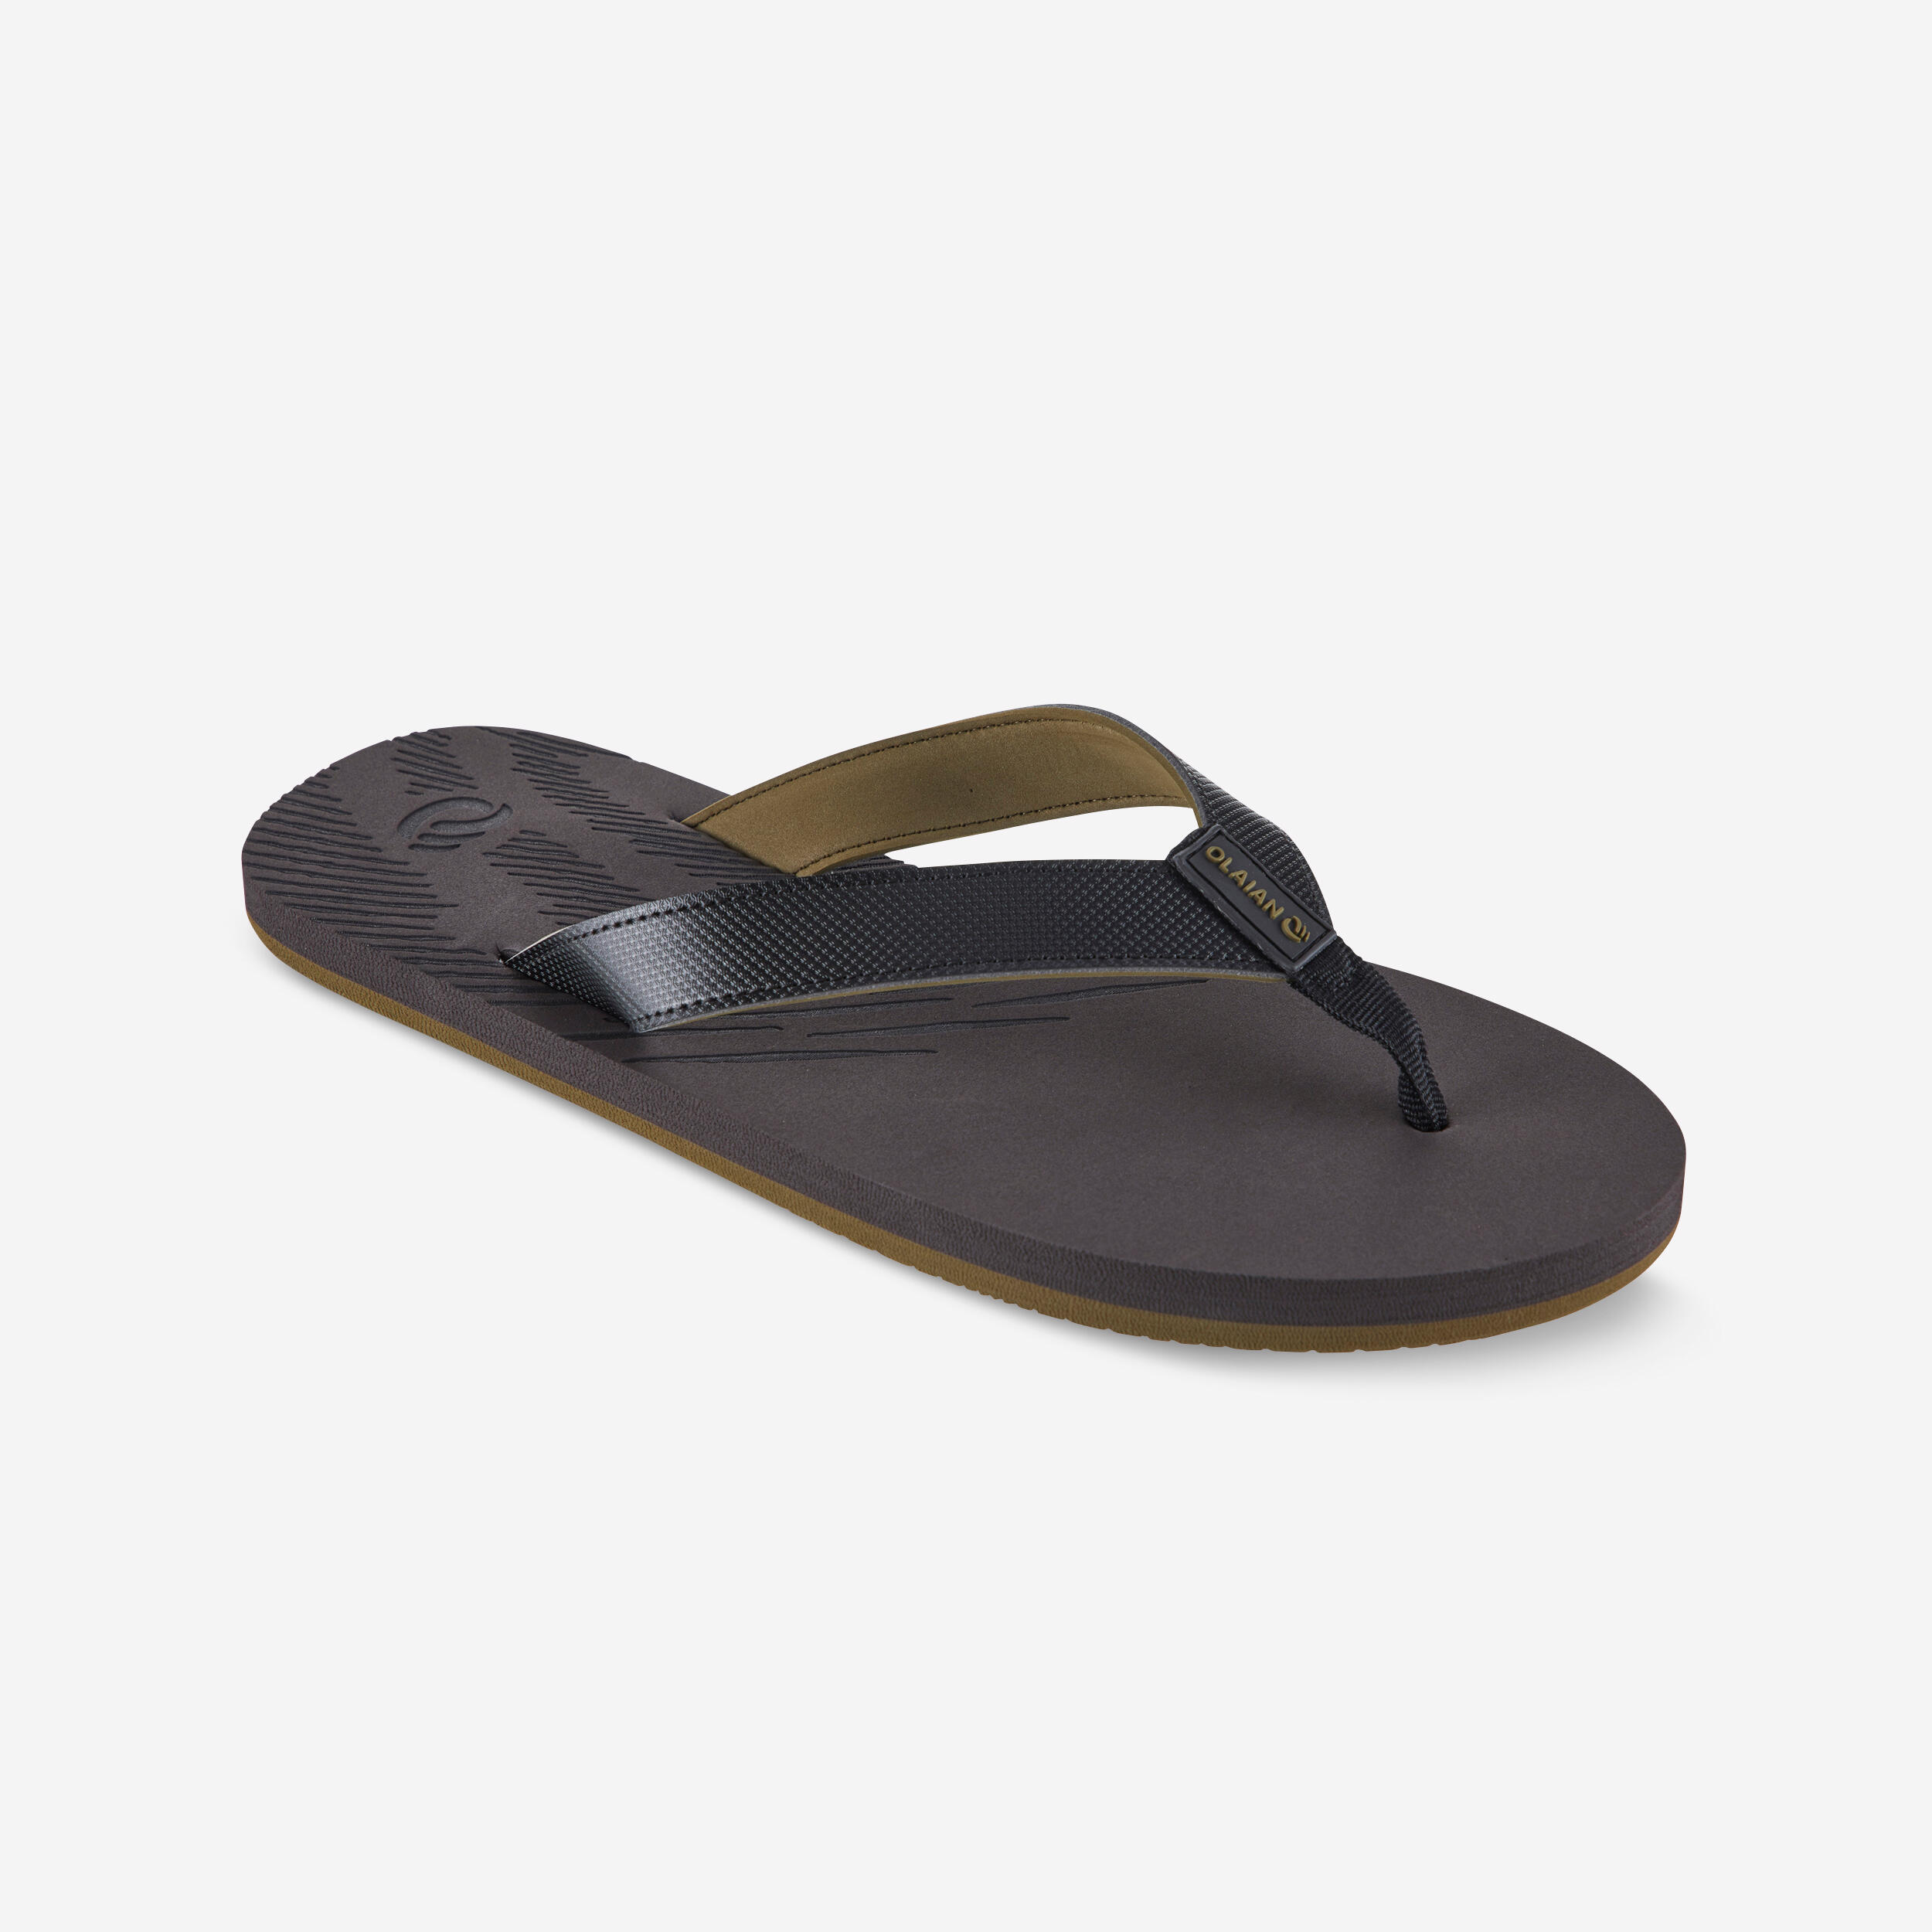 decathlon sandals for men